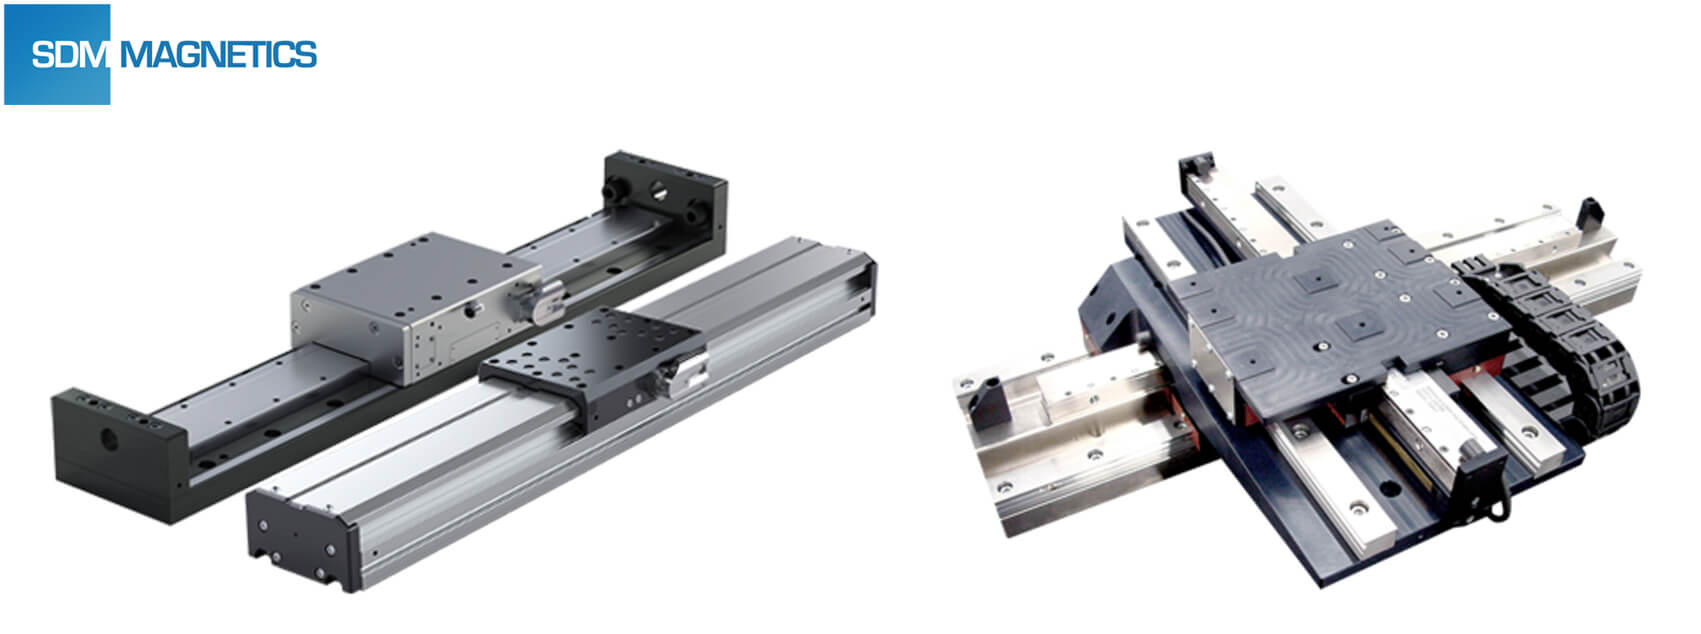 Linear Motor Magnet and Assembly - SDM Magnetics Co., Ltd.